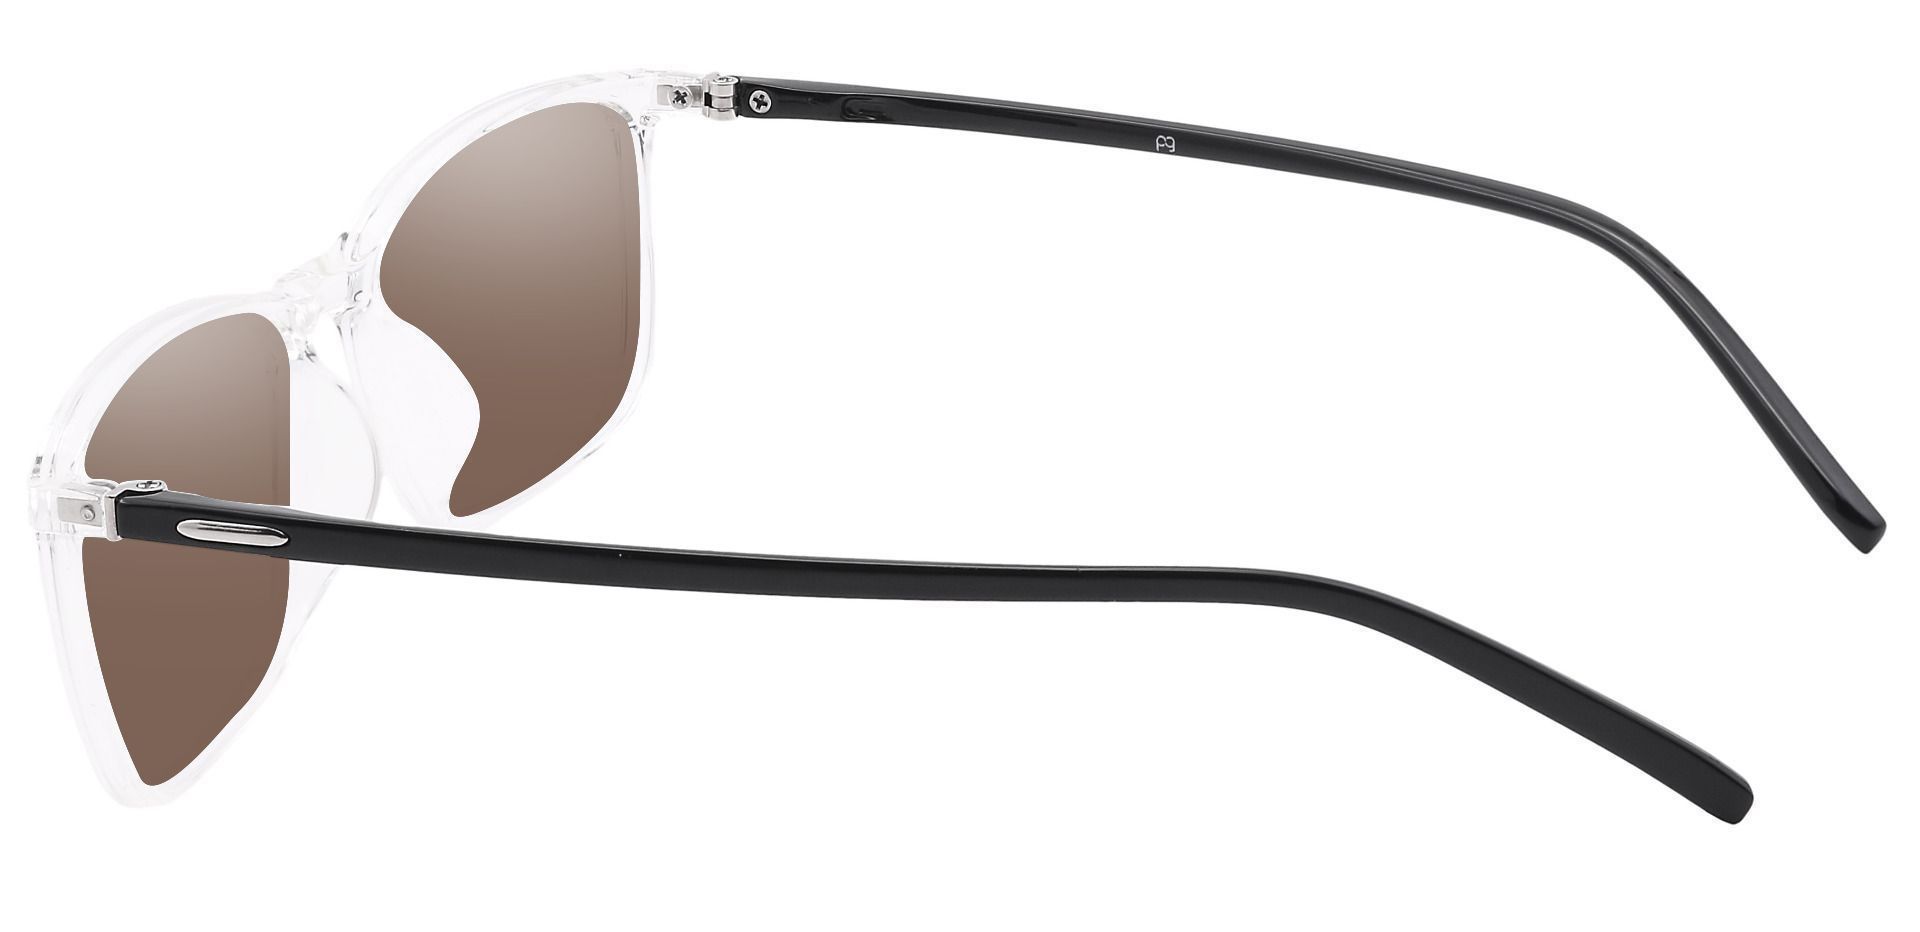 Fuji Rectangle Prescription Sunglasses - Clear Frame With Brown Lenses